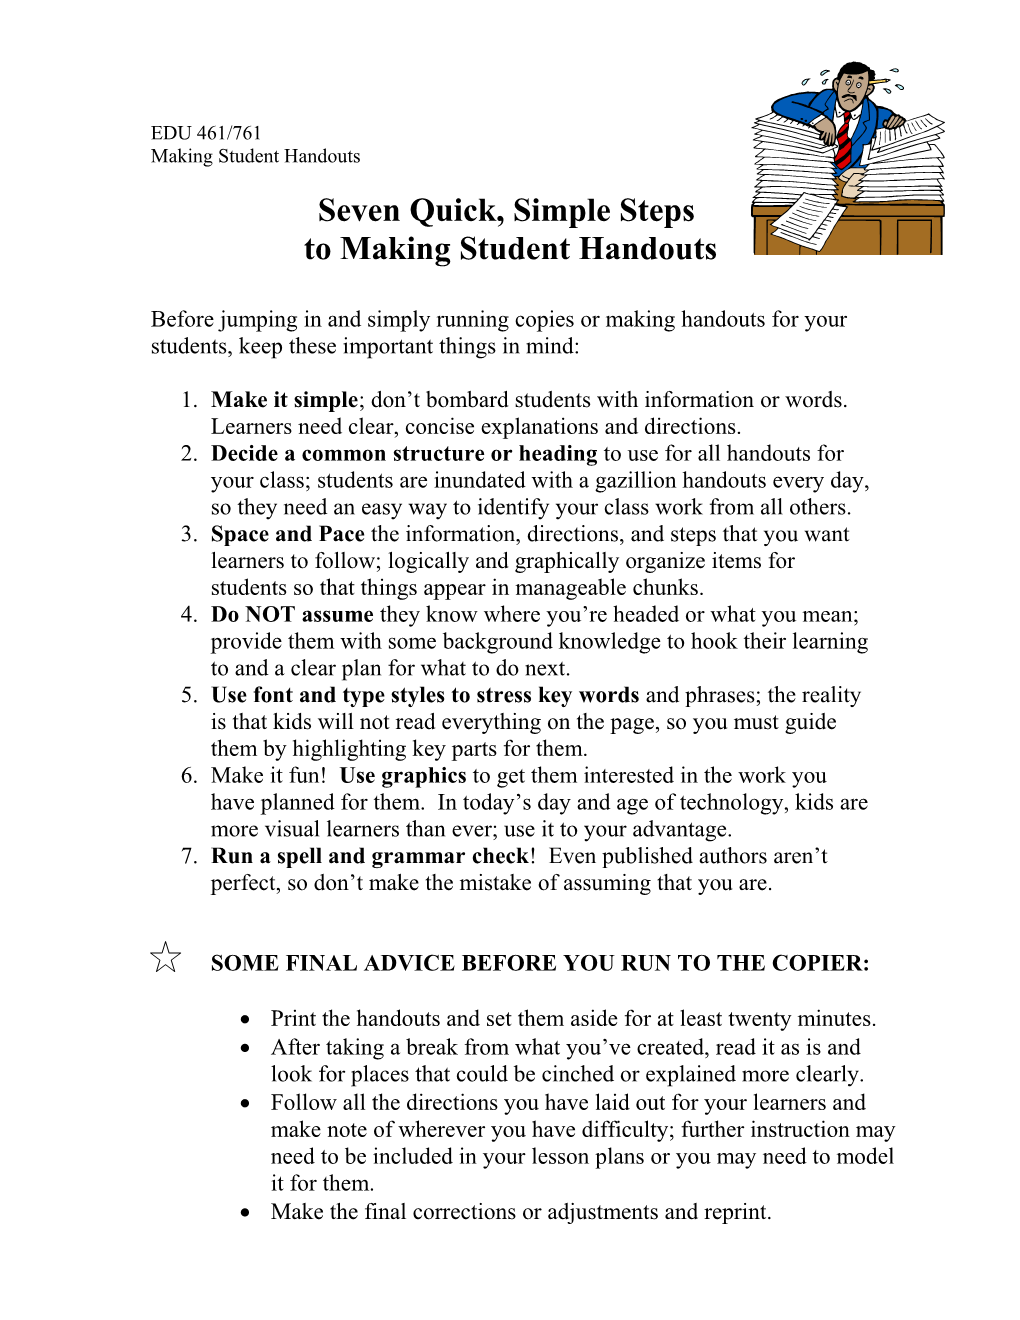 Seven Quick, Simple Steps